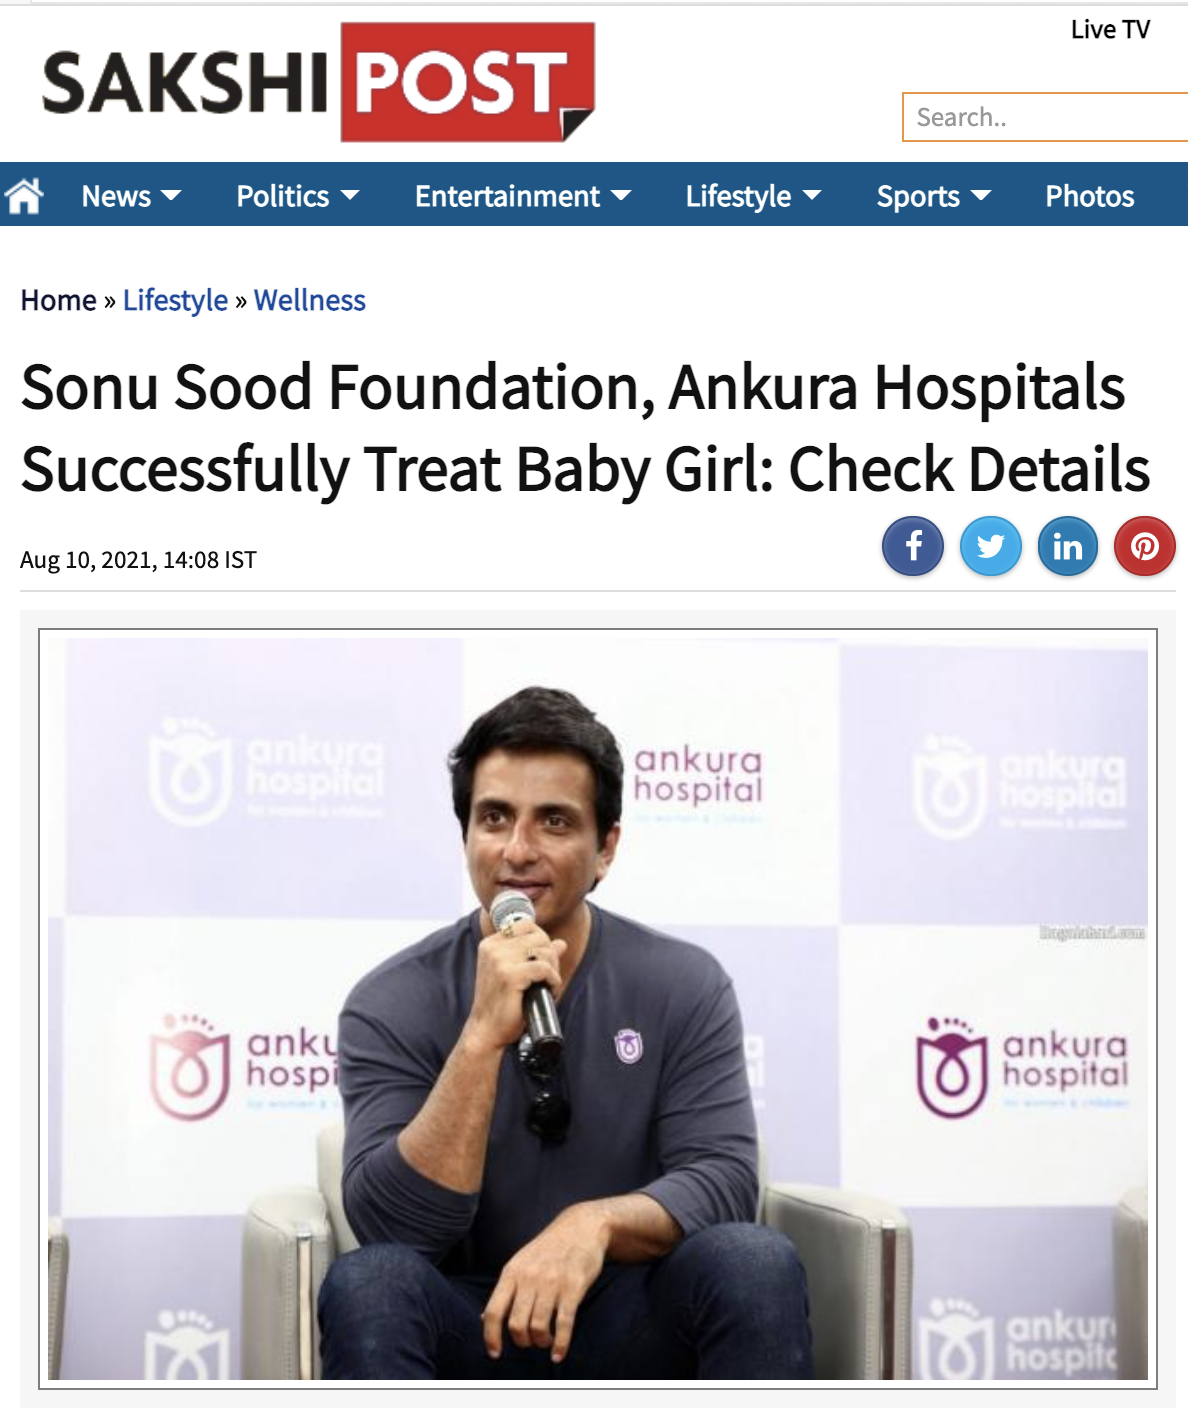 Sonu Sood Foundation, Ankura Hospitals Successfully Treat Baby Girl: Check Details